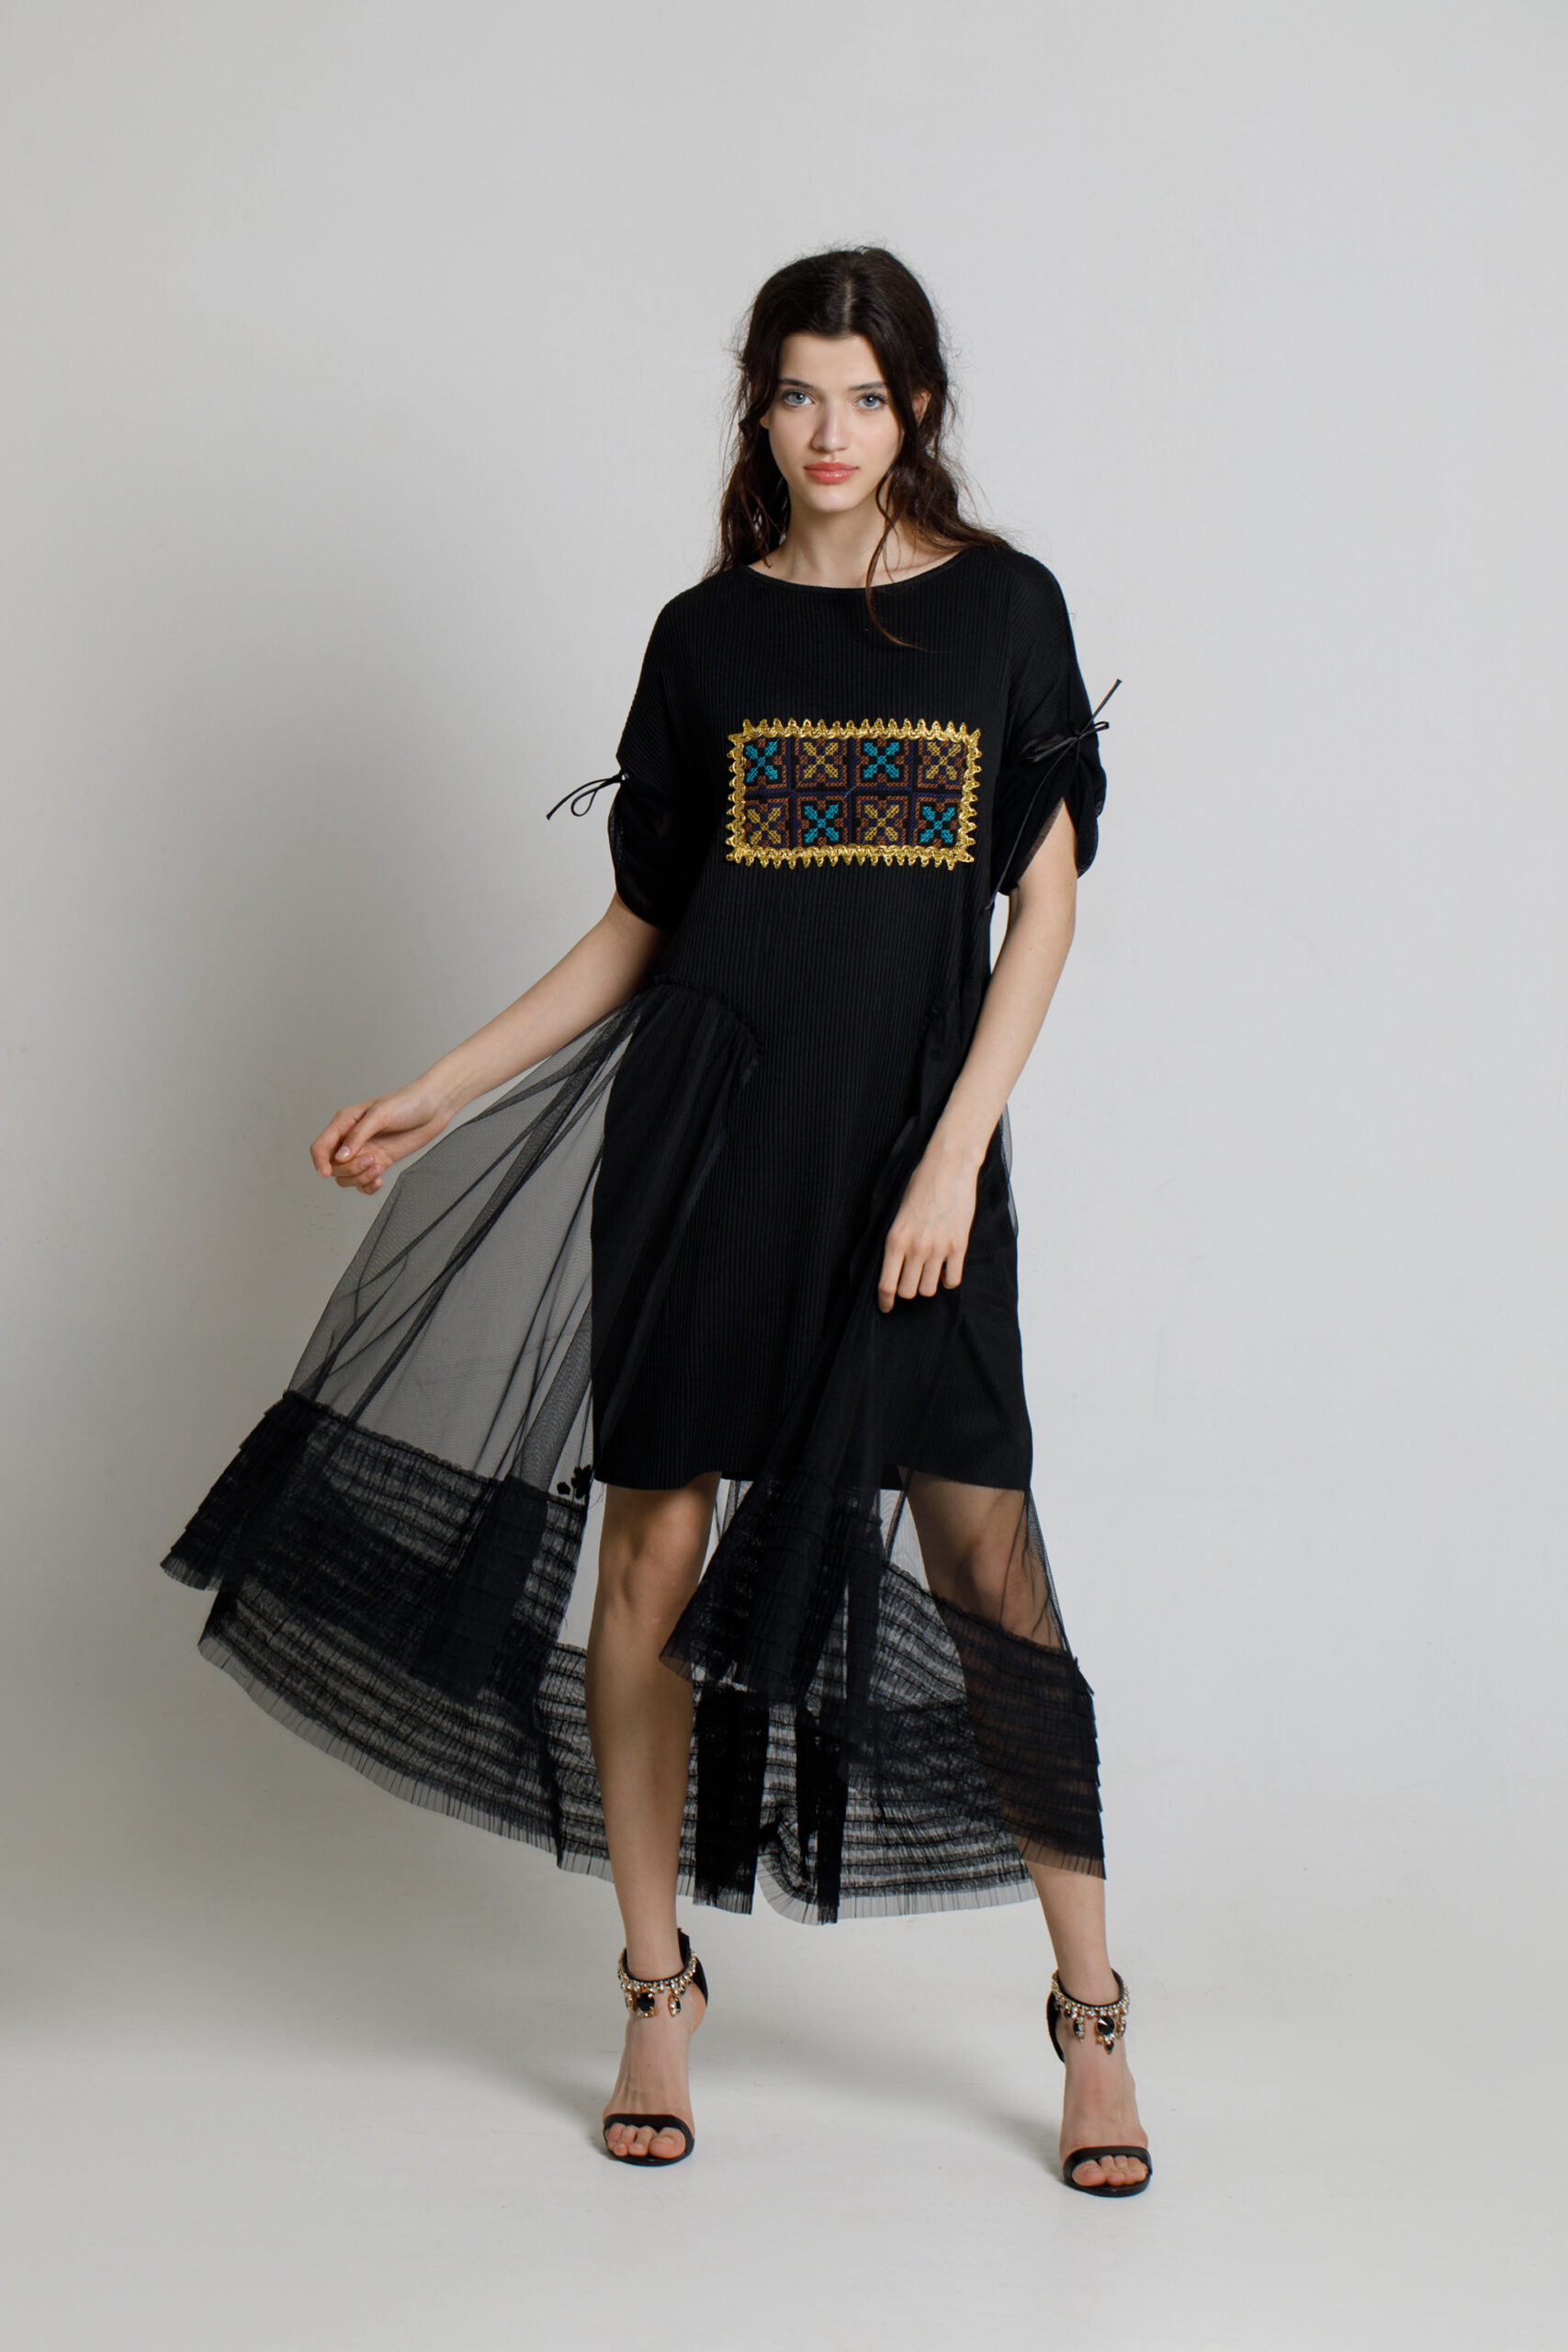 NAVY Elegant black dress with tulle train. Natural fabrics, original design, handmade embroidery